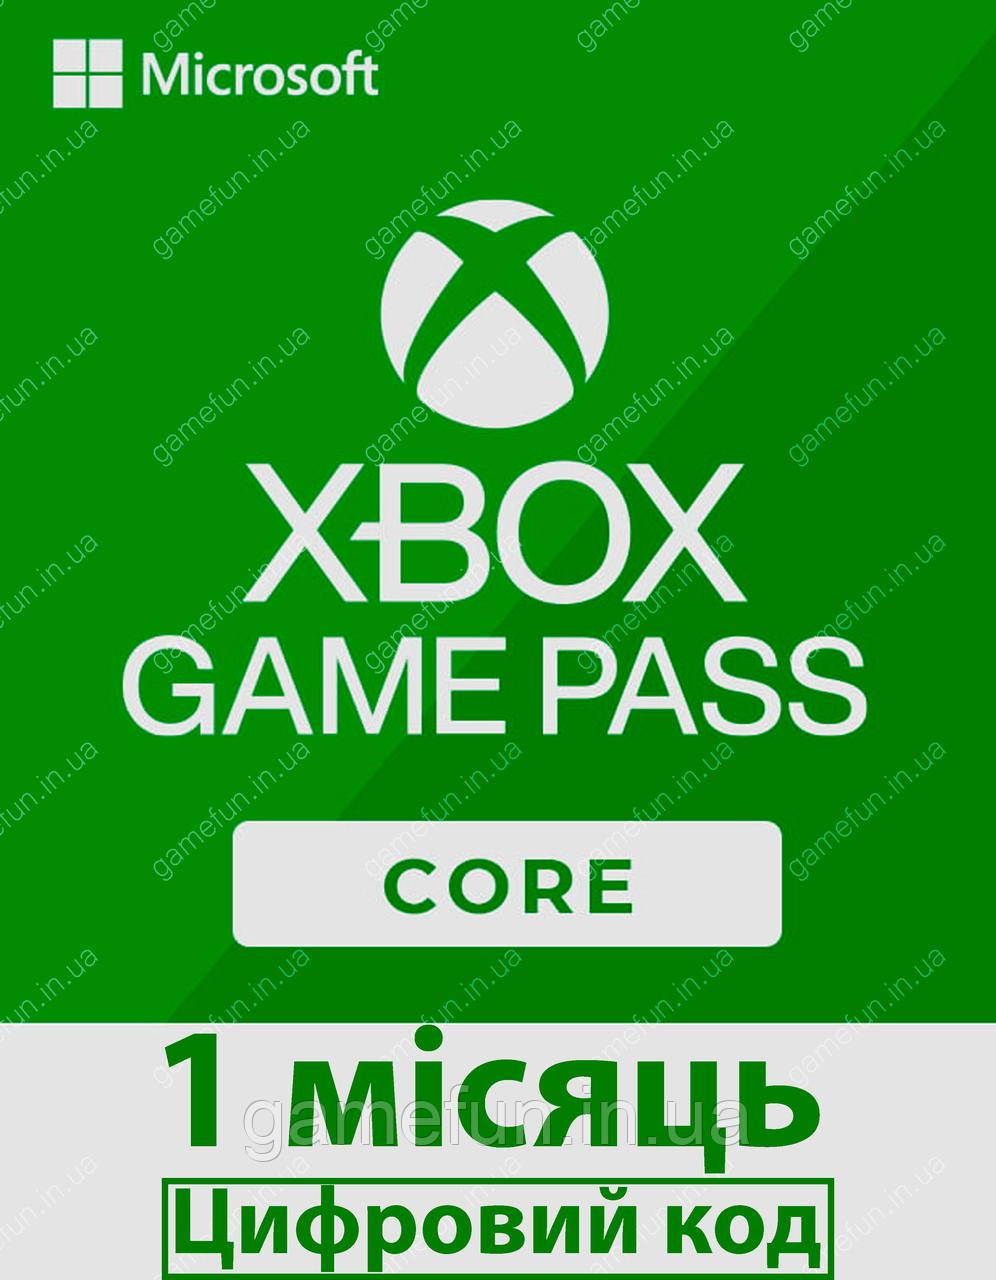 Xbox Game Pass Core 1 місяць Xbox 360 | Xbox One |Xbox Series | Цифровий код | ключ